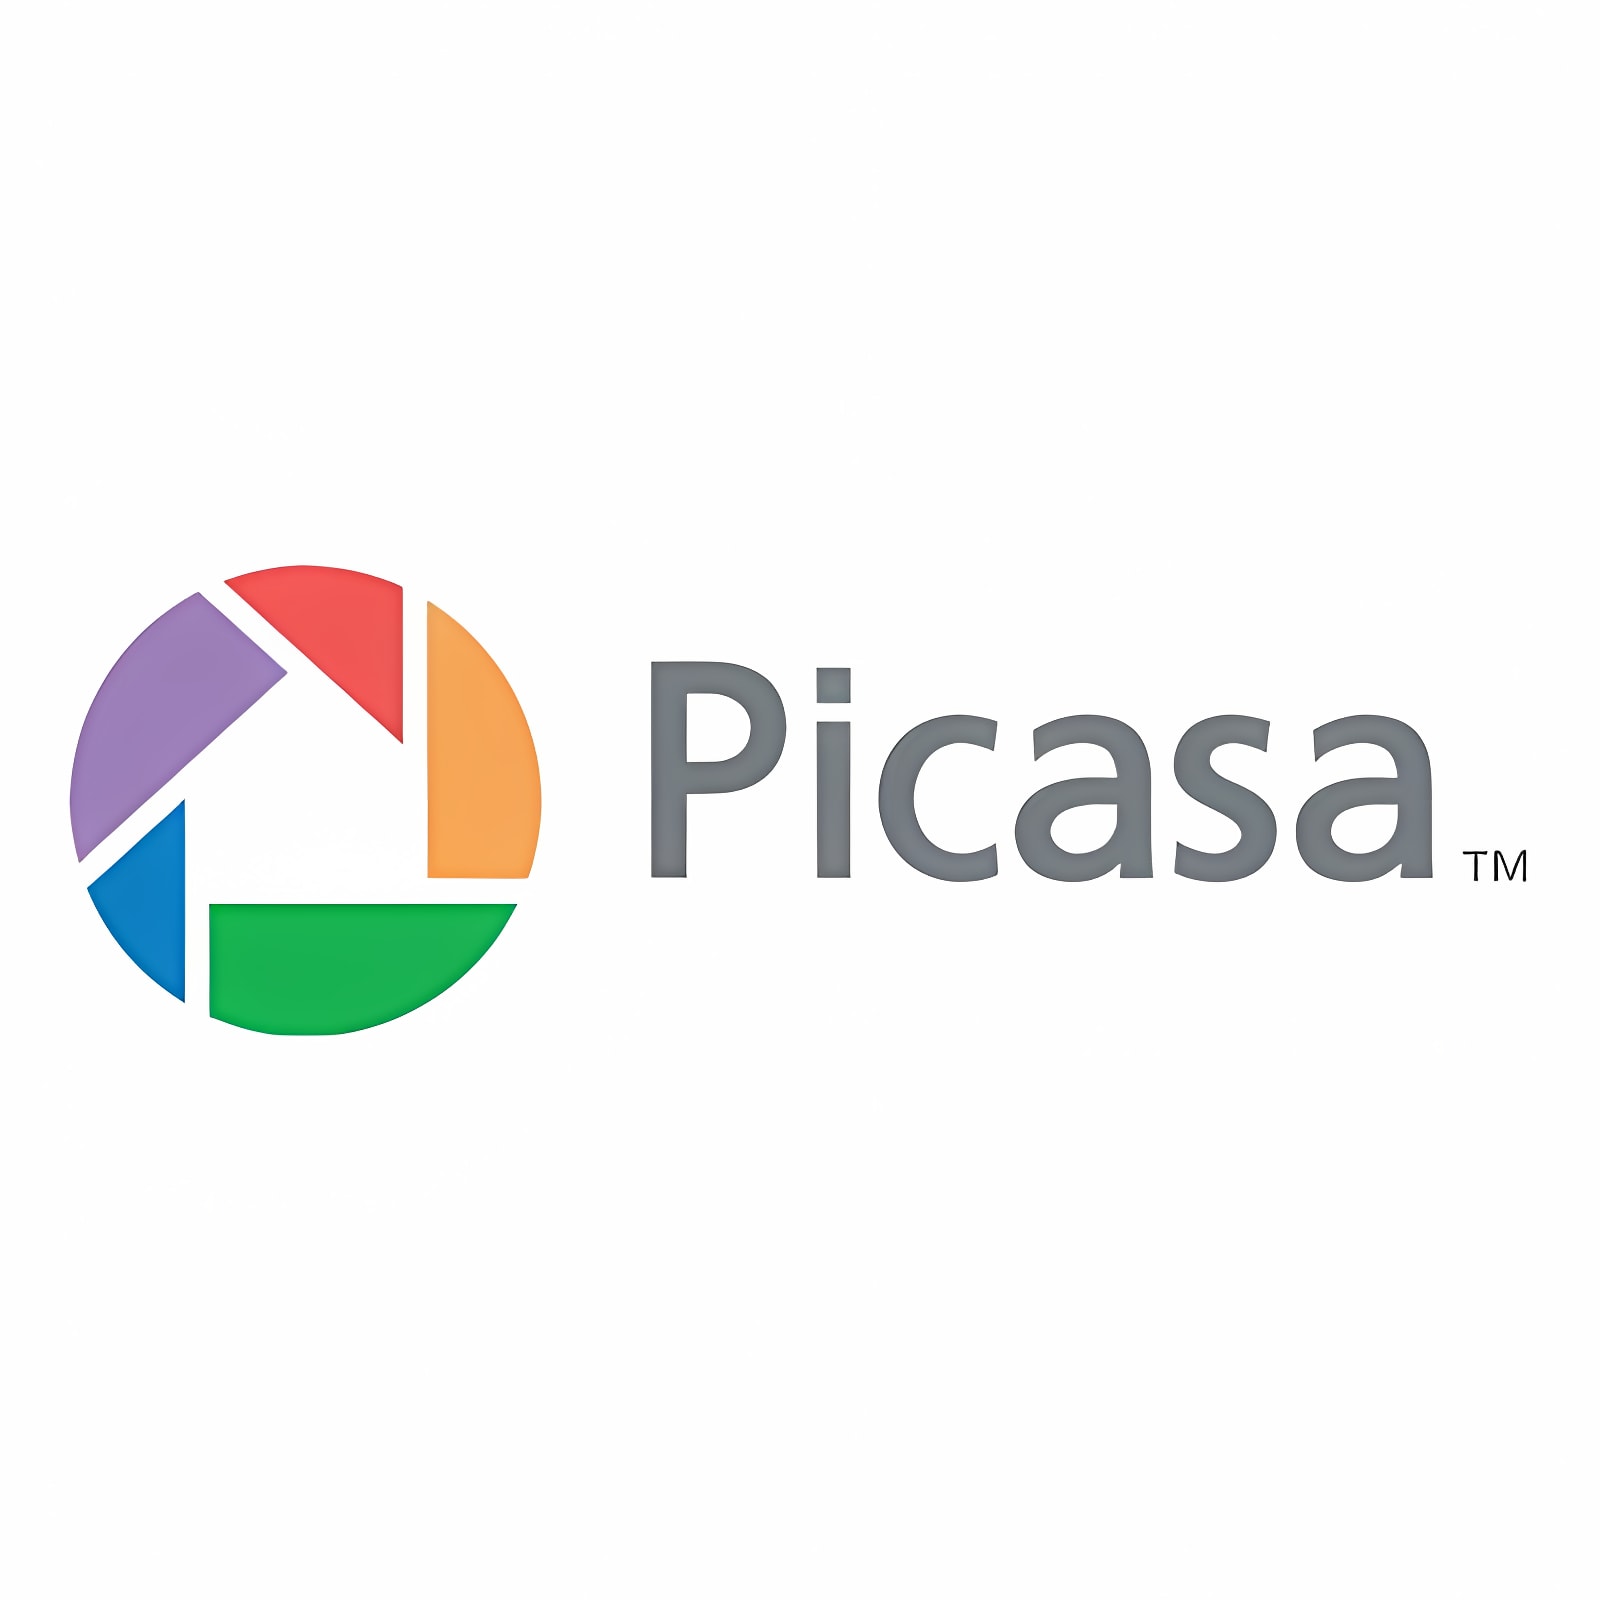 where to download picasa windows 10